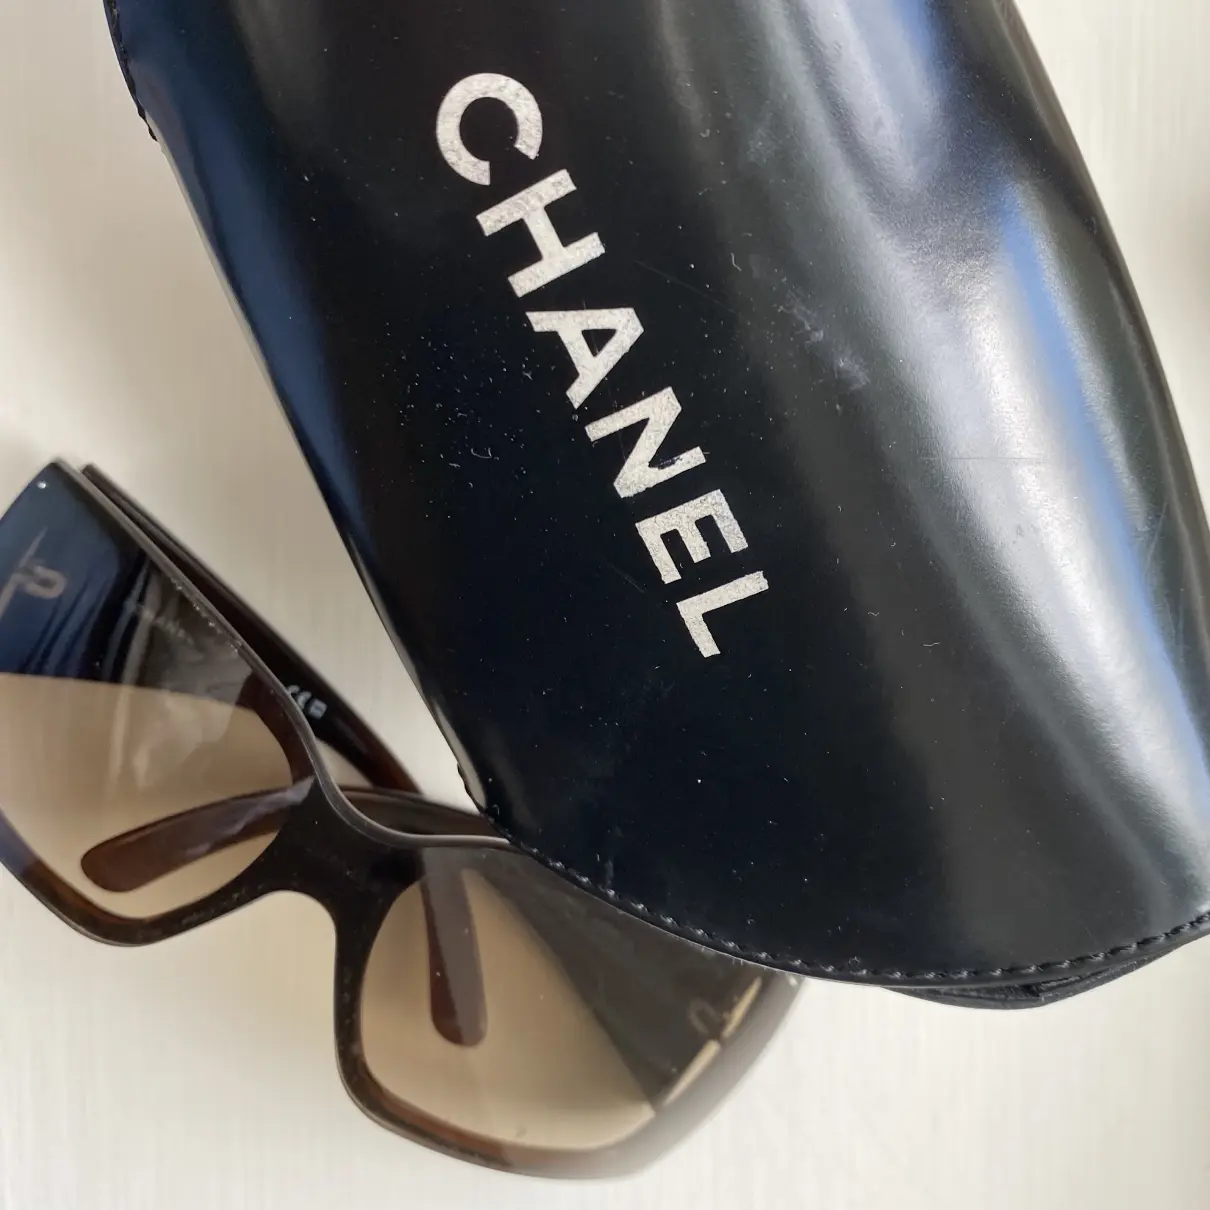 Luxury Chanel Sunglasses Women